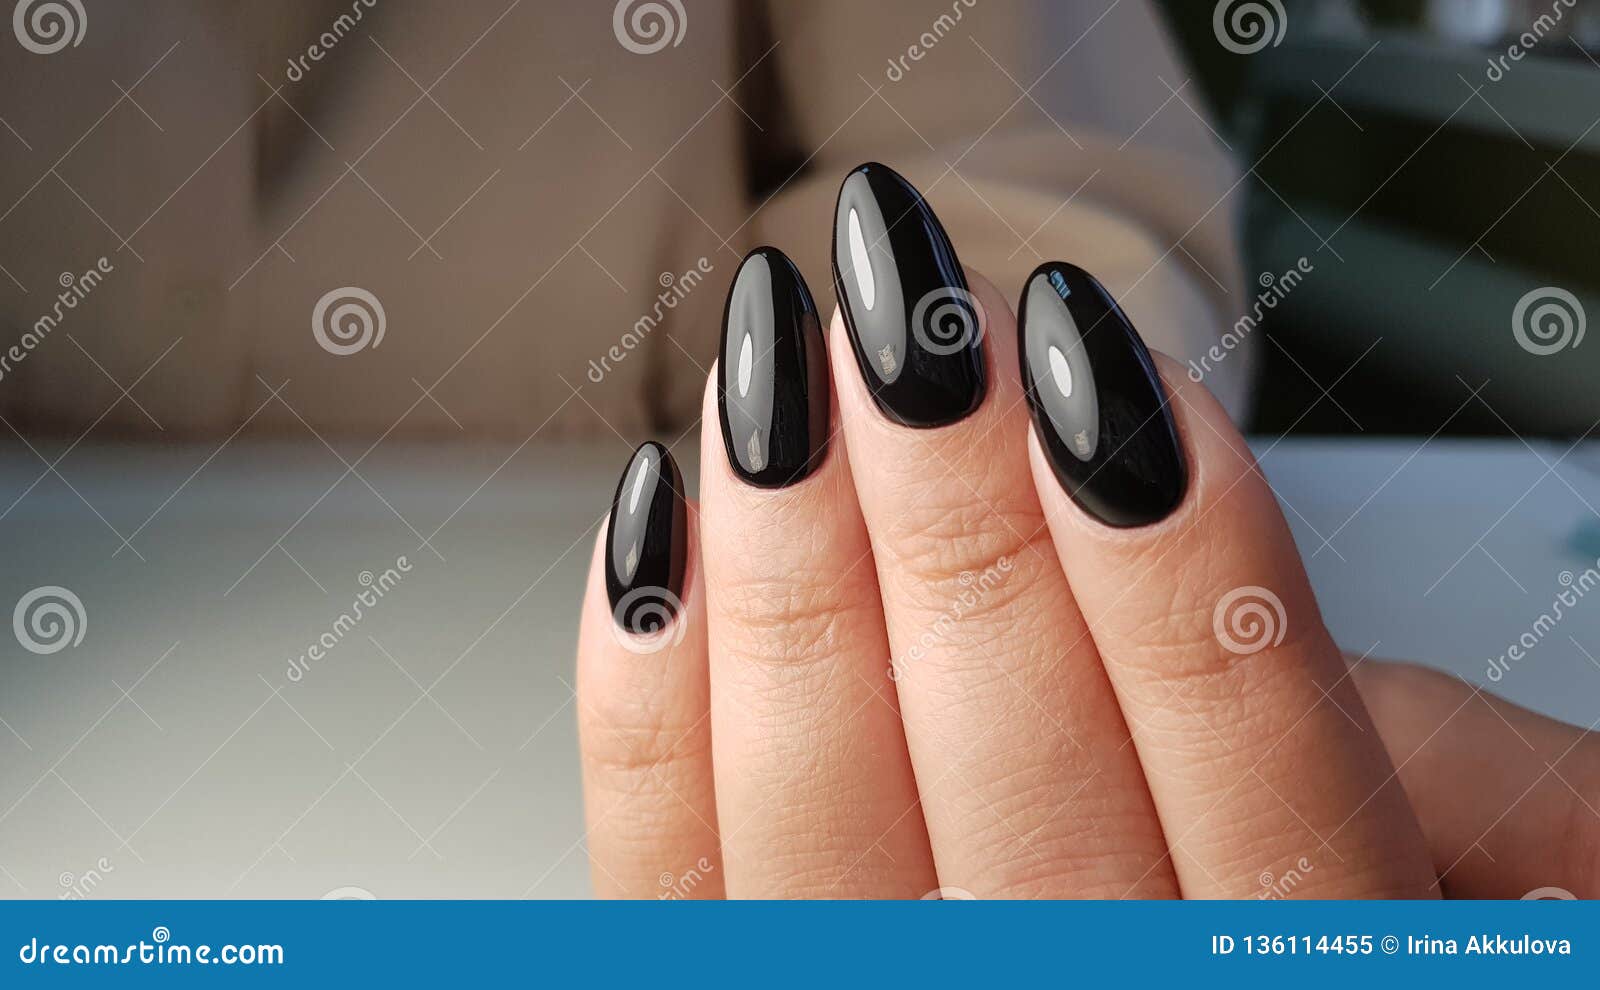 Long Black Cougar Nails For Halloween Stock Image Image Of Nails Wallpaper 136114455